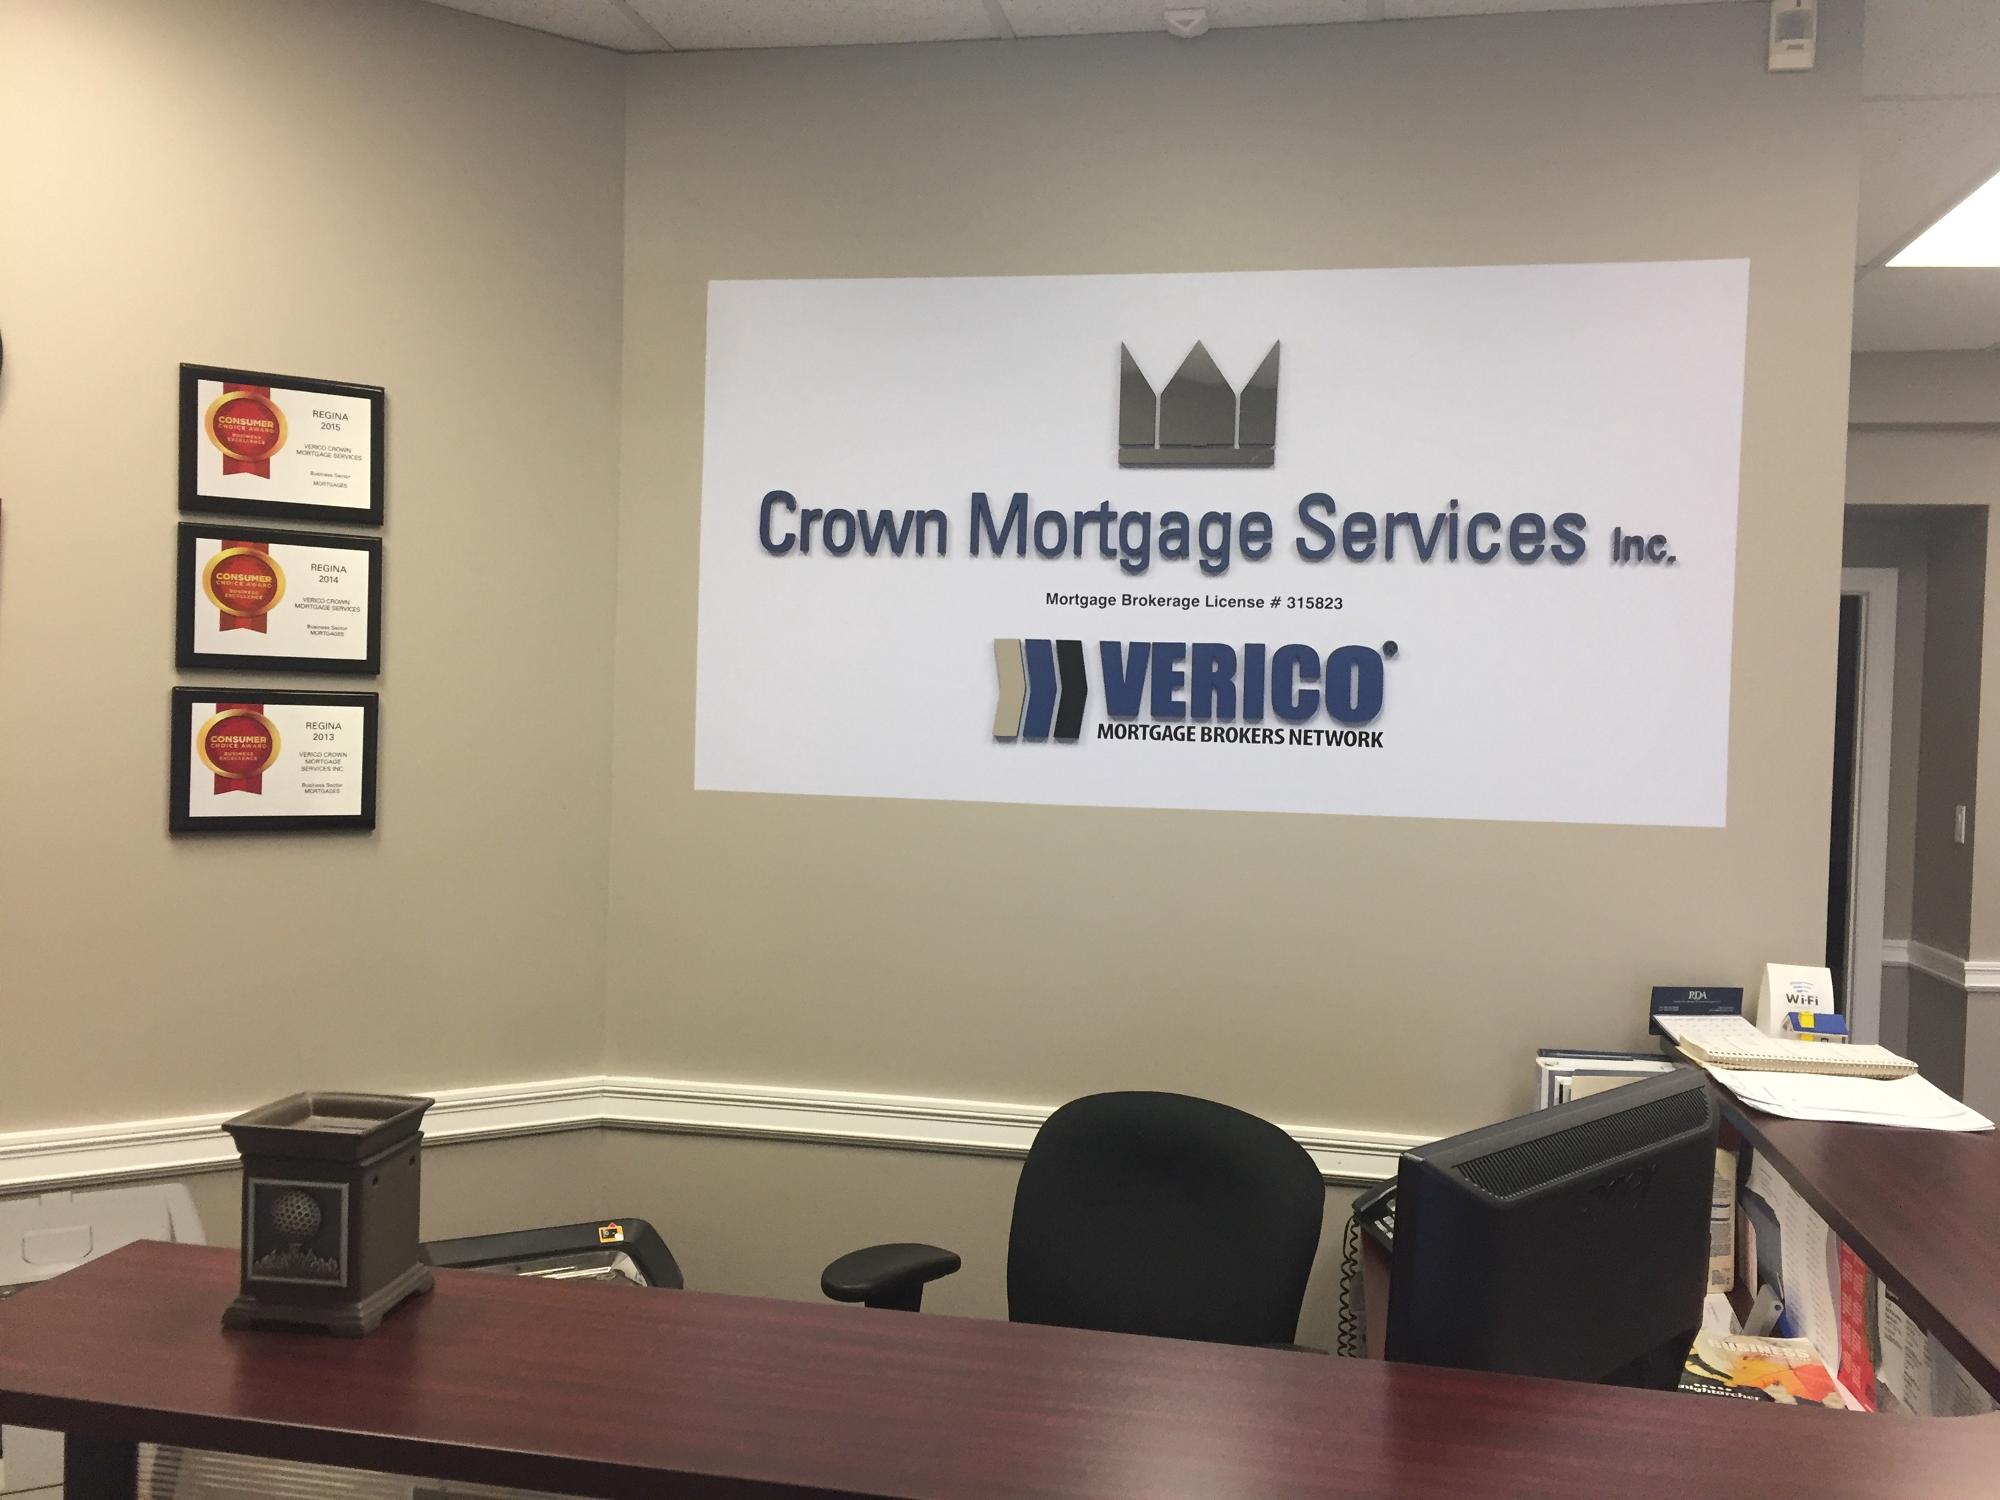 Verico Crown Mortgage Services